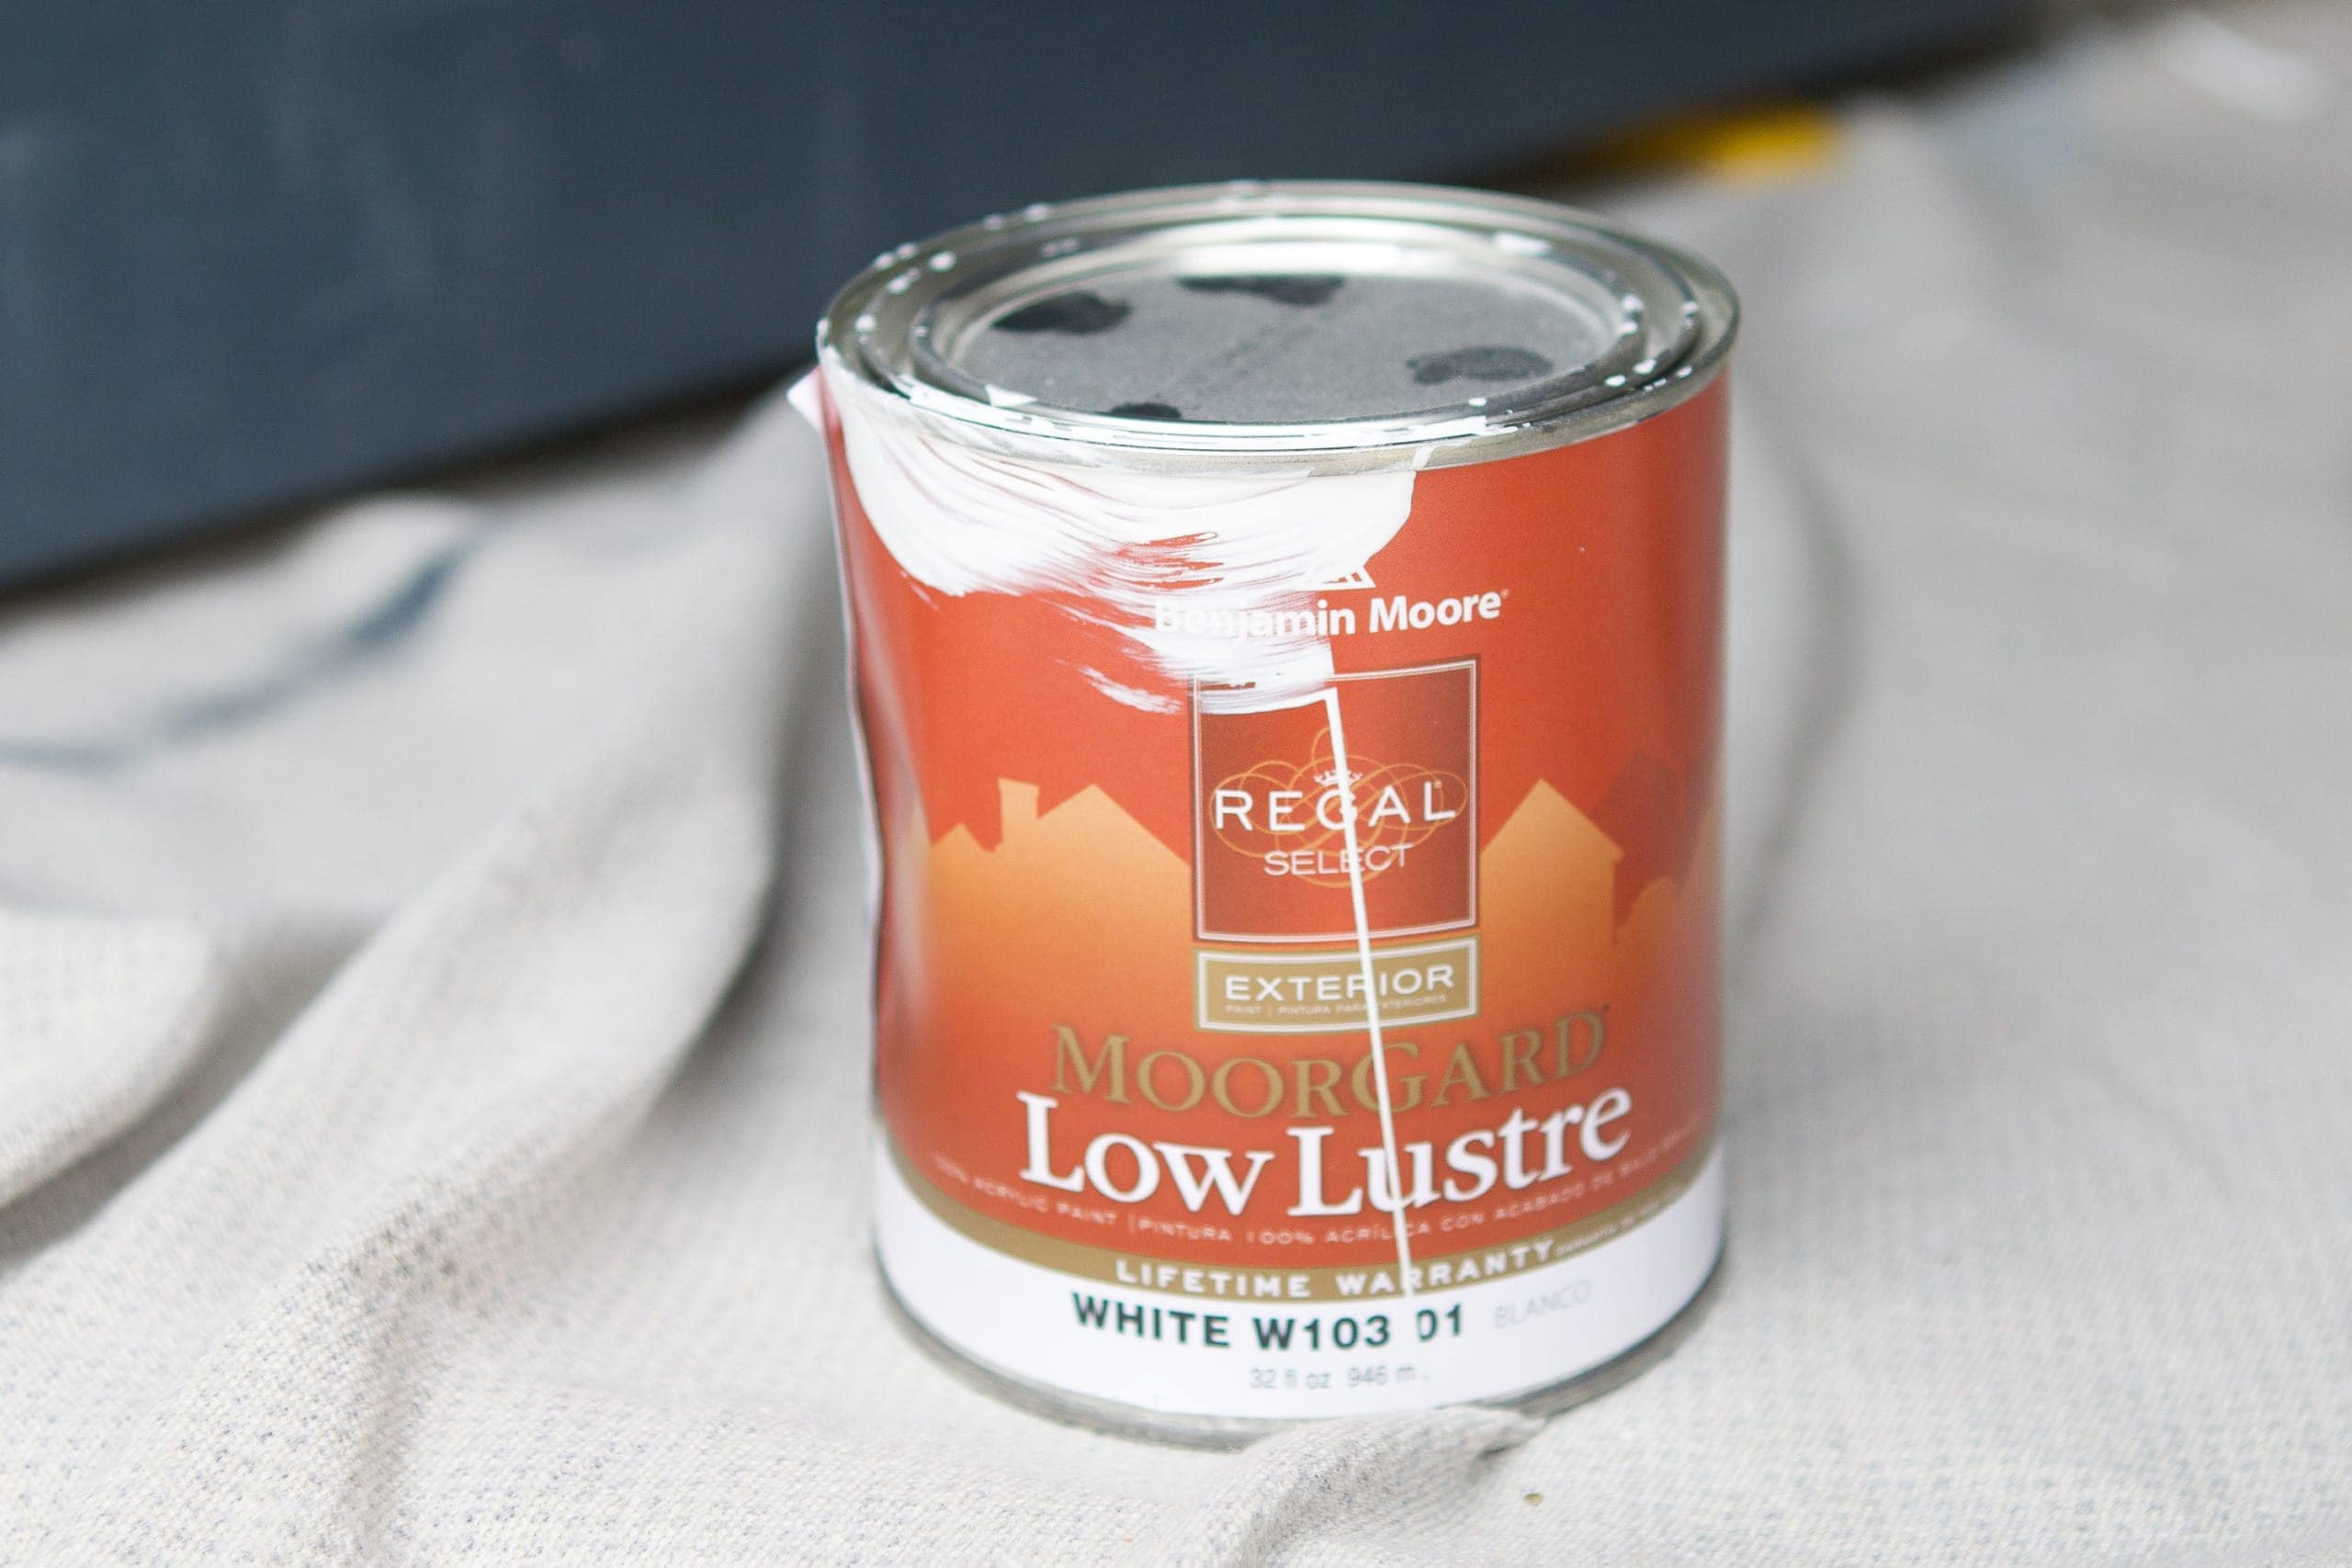 Using a low lustre exterior white paint